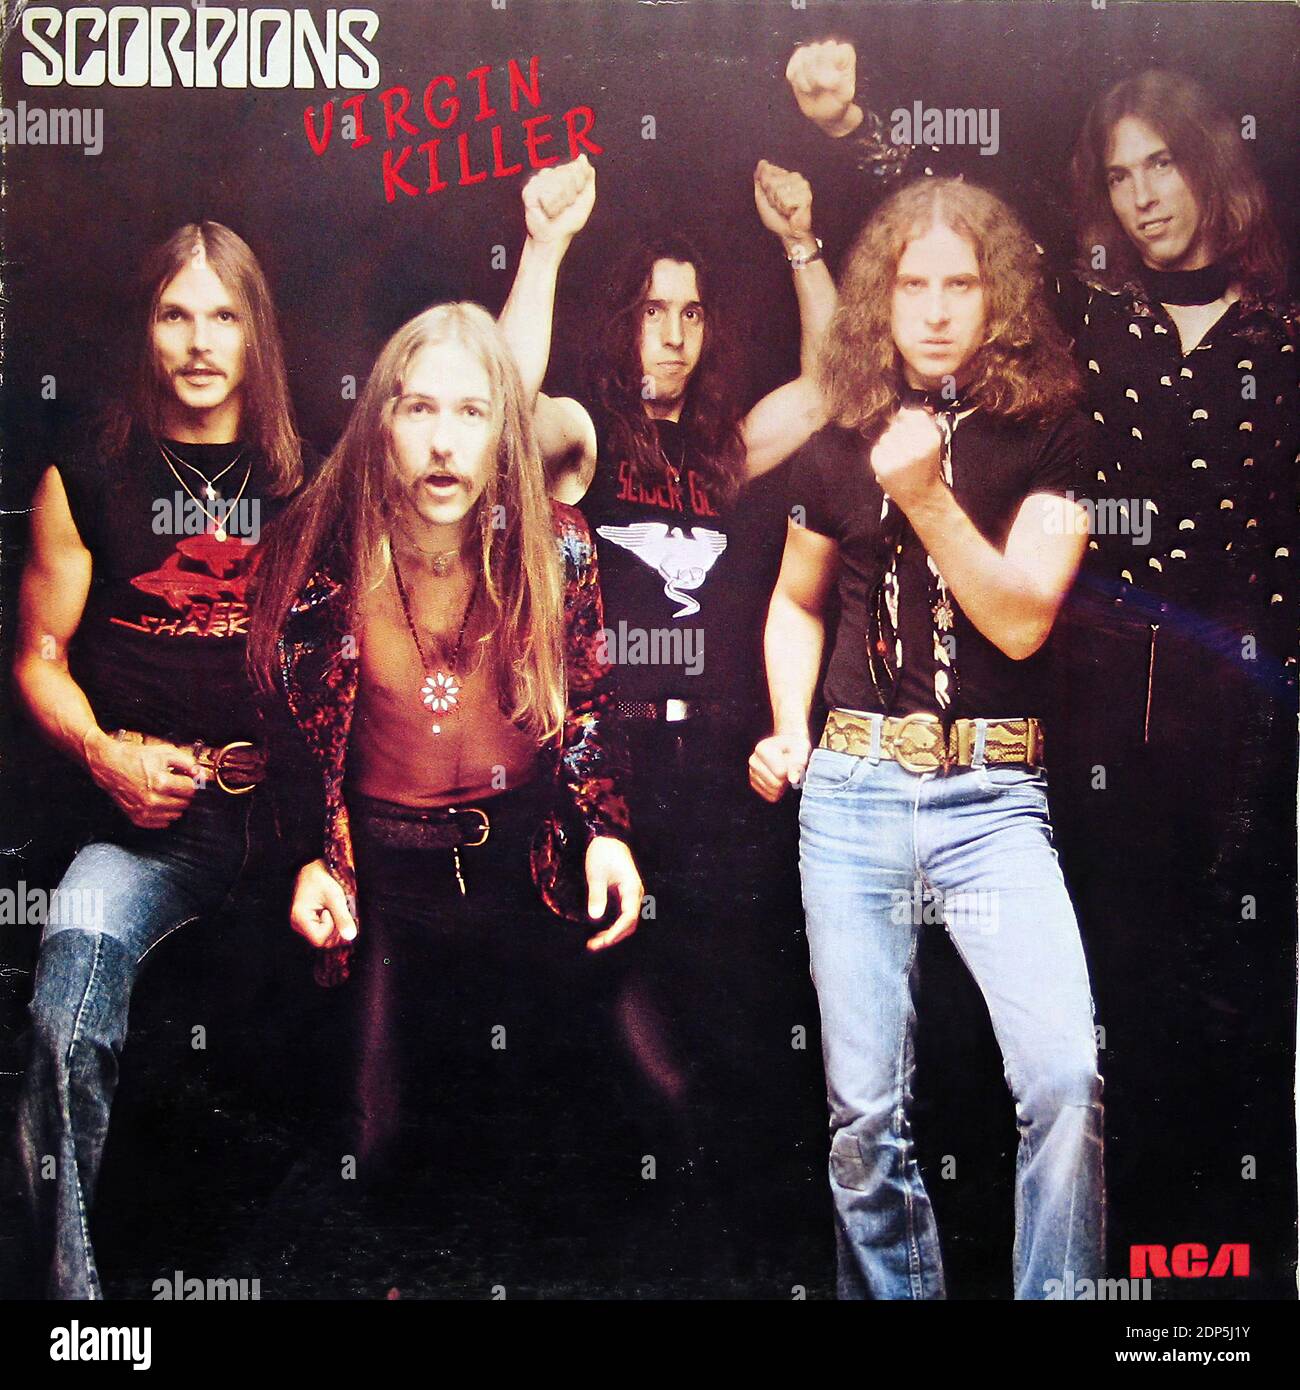 Scorpions Virgin Killer ITaly  - Vintage Vinyl Record Cover Stock Photo